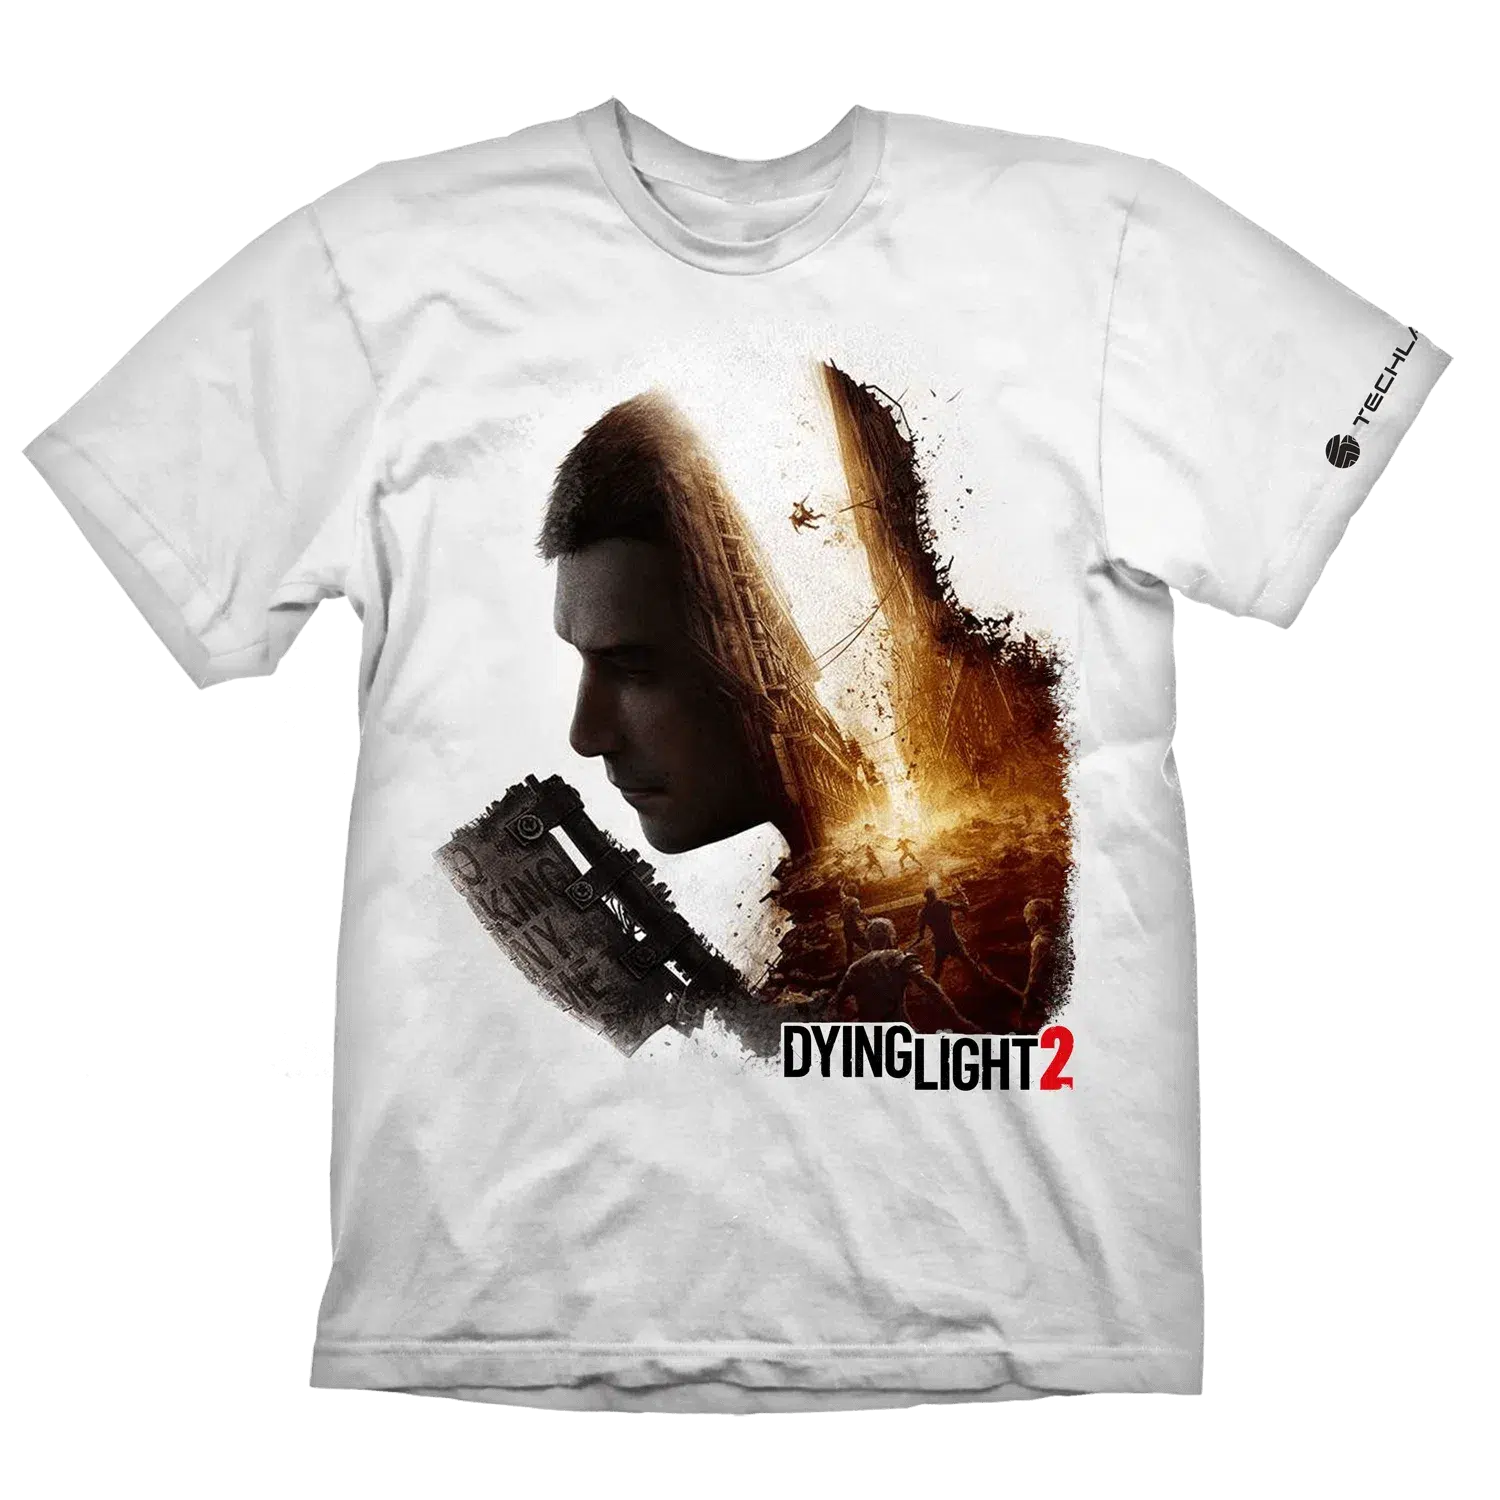 Dying Light 2 T-Shirt "Aiden Caldwell" White XL